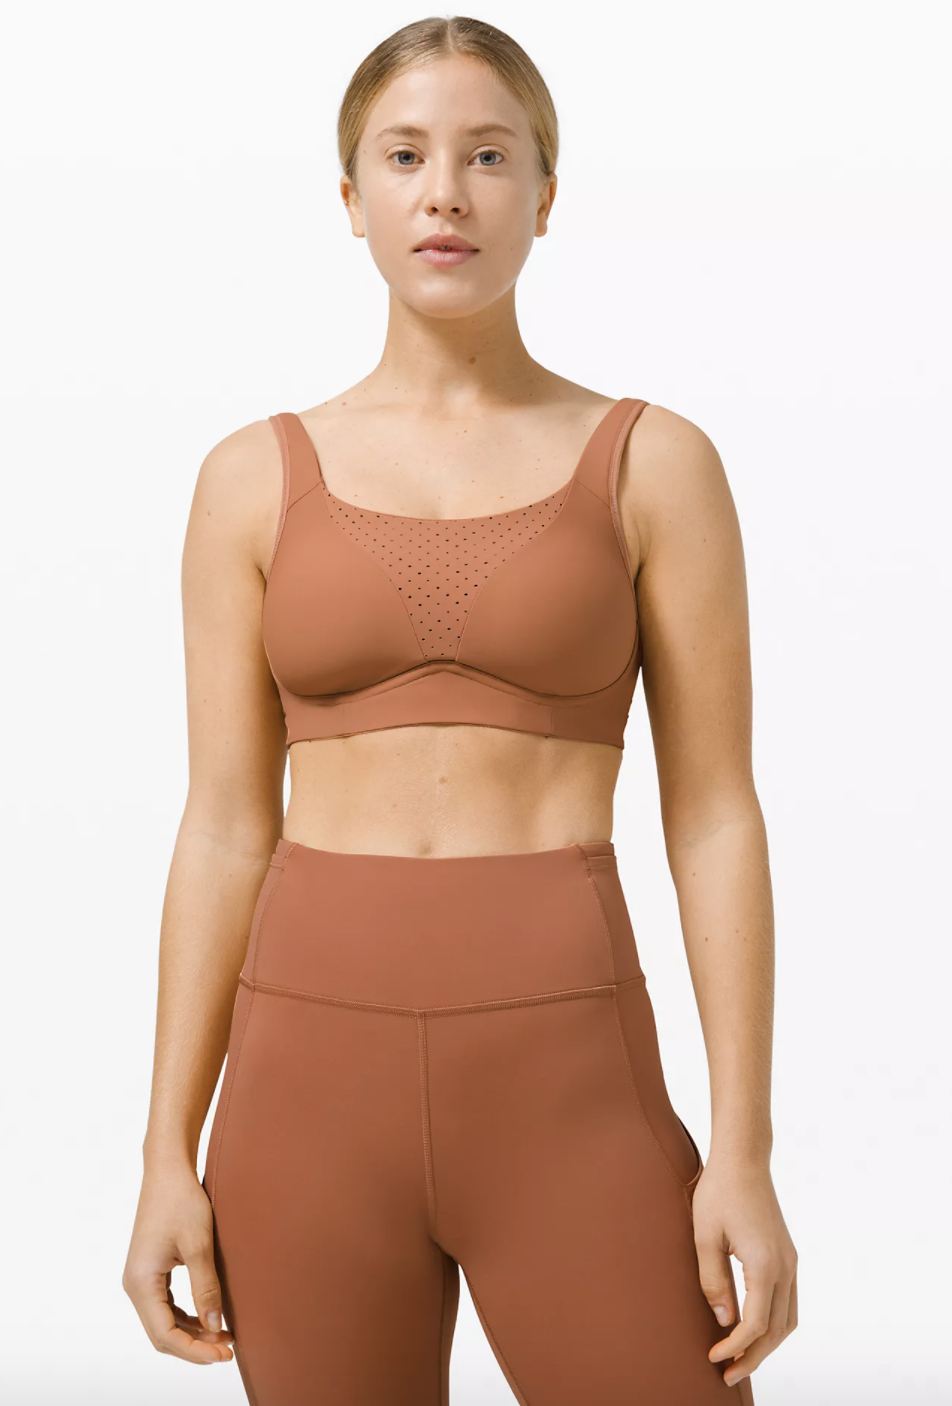 model wearing sports bra and leggings